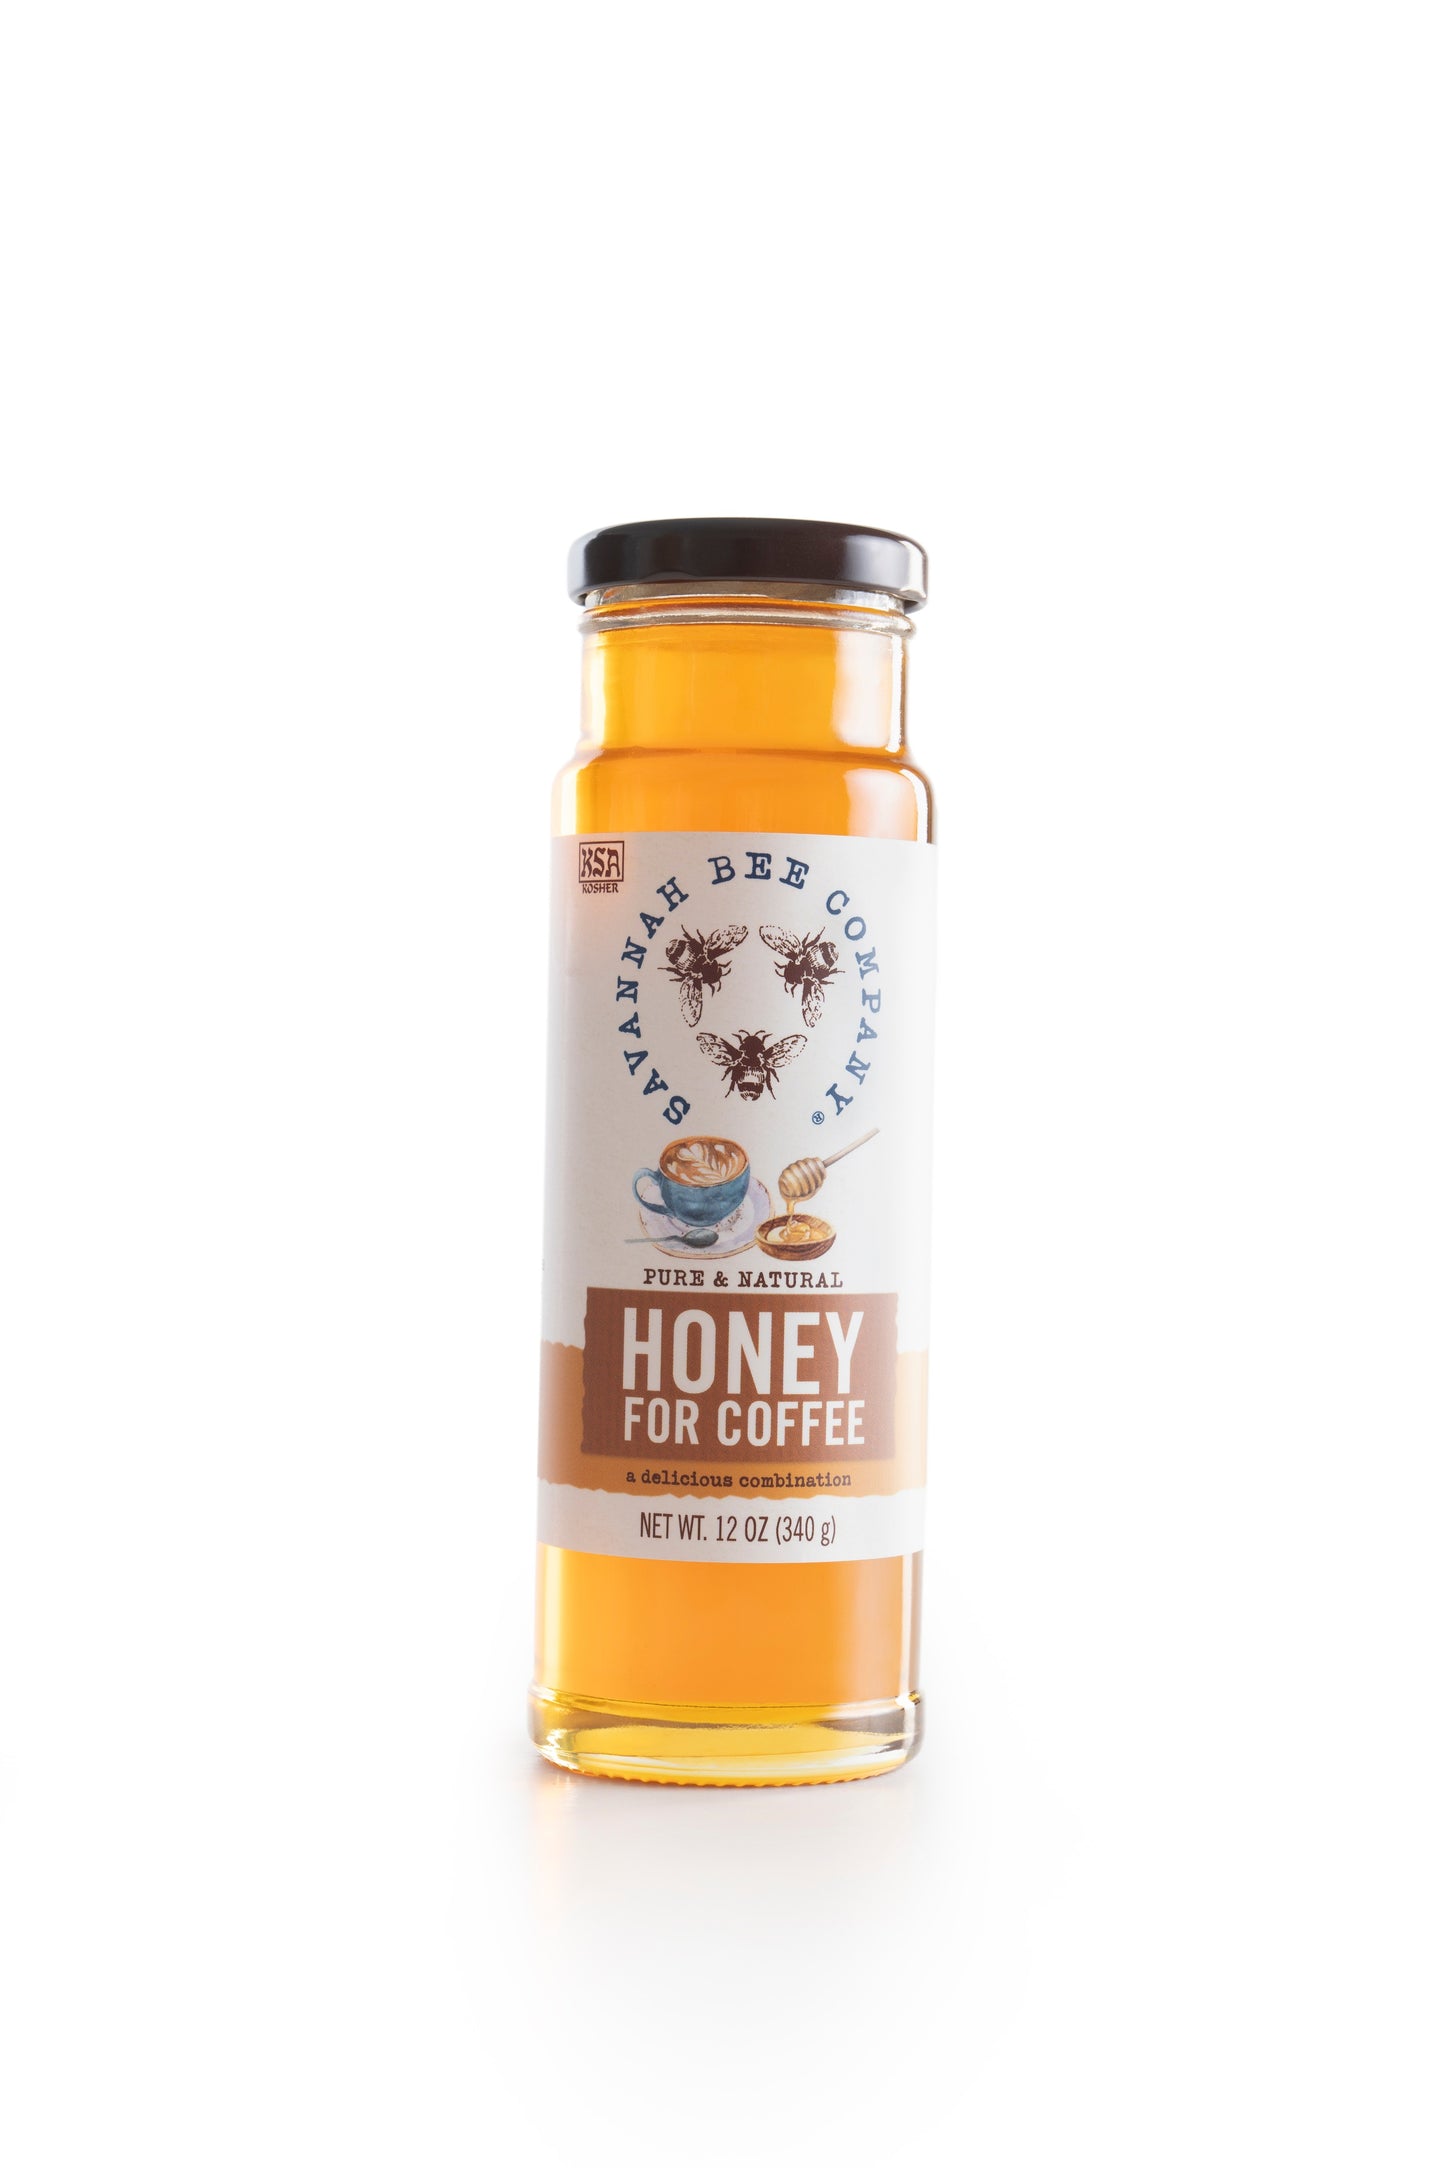 12 ounce honey for coffee jar studio shot.